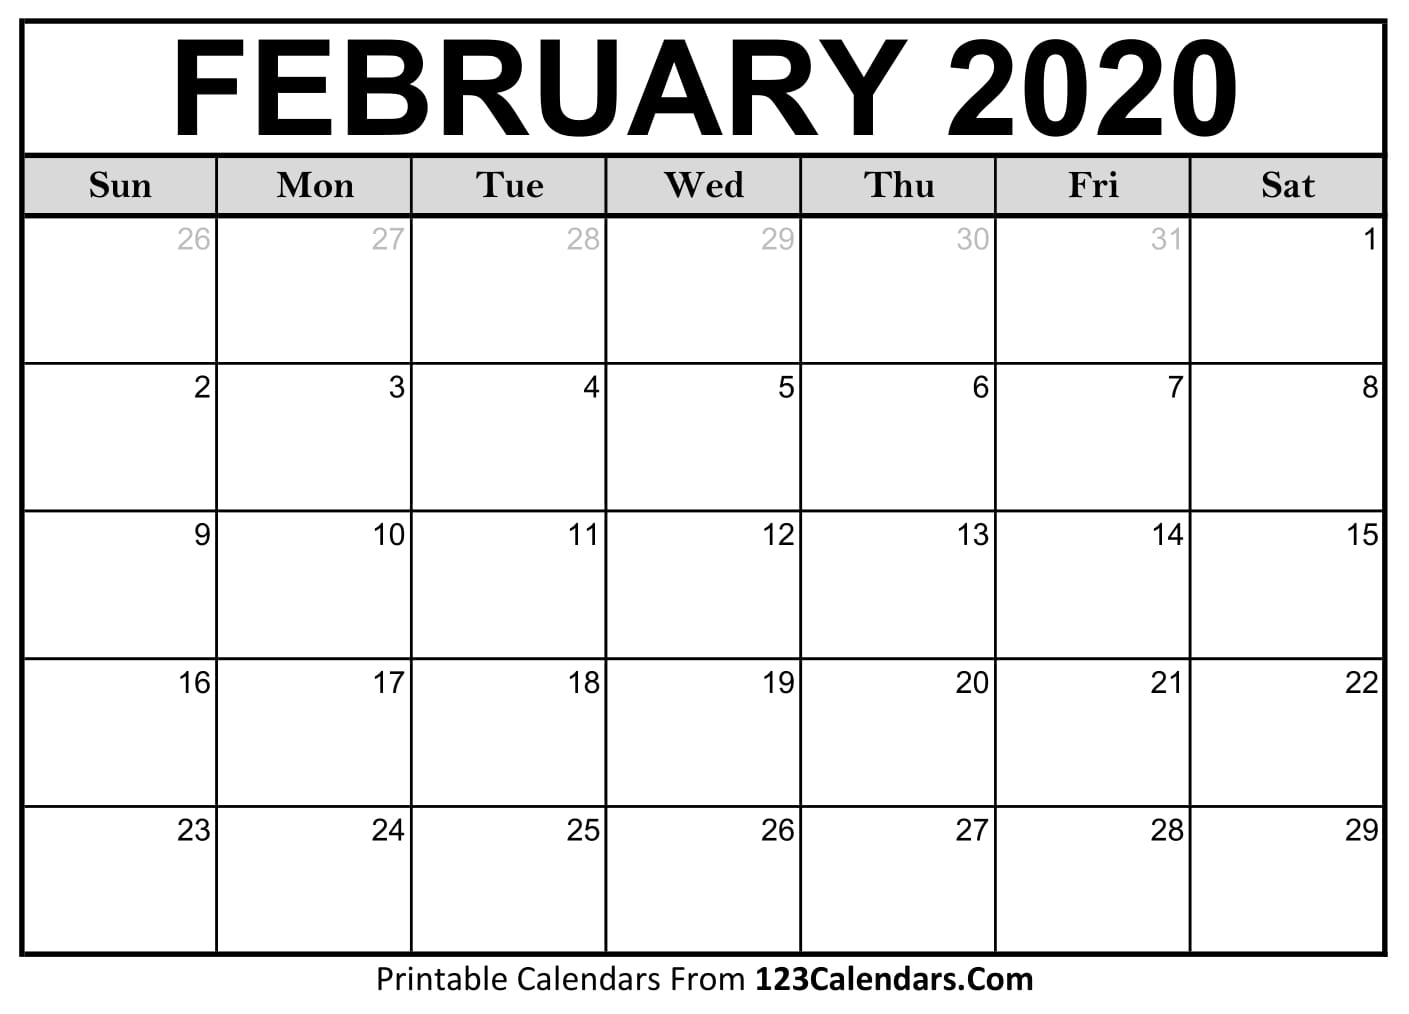 Monthly Calendar February 2020 Printable  Bolan in Printable Calendars From 123Calendars